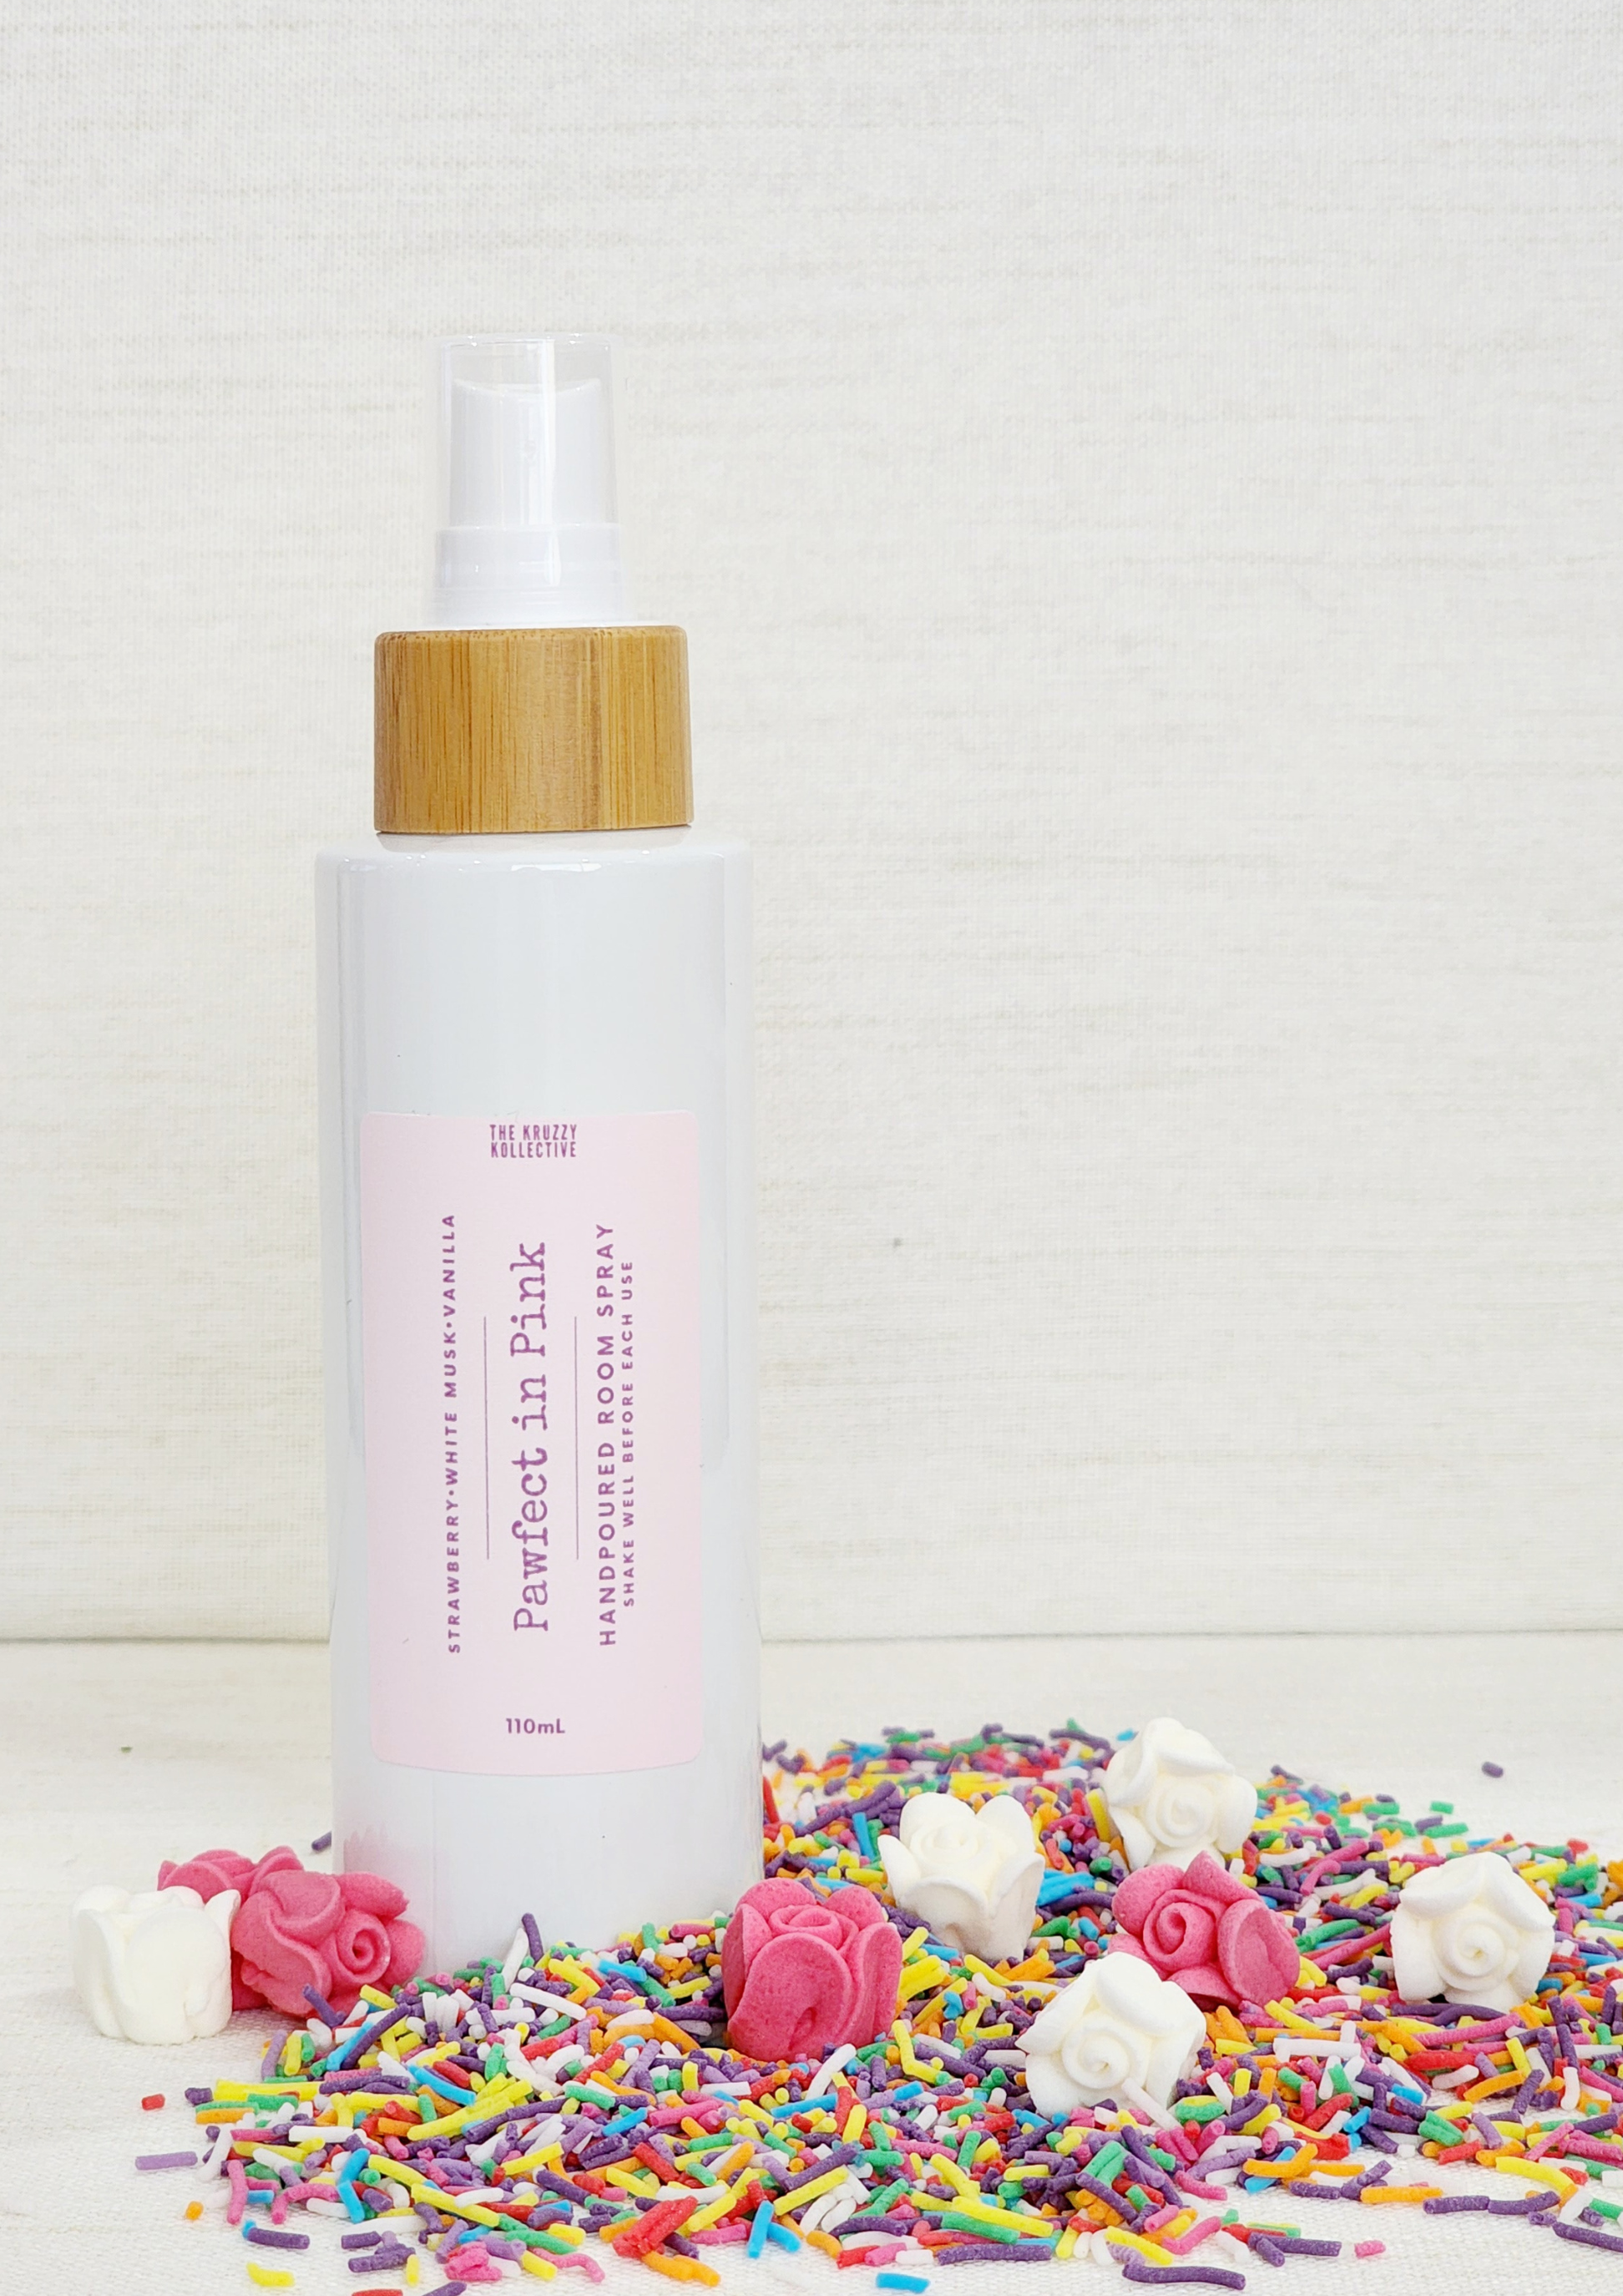 home fragrance spray odor eliminators eco friendly room freshener air freshener strawberry musk vanilla